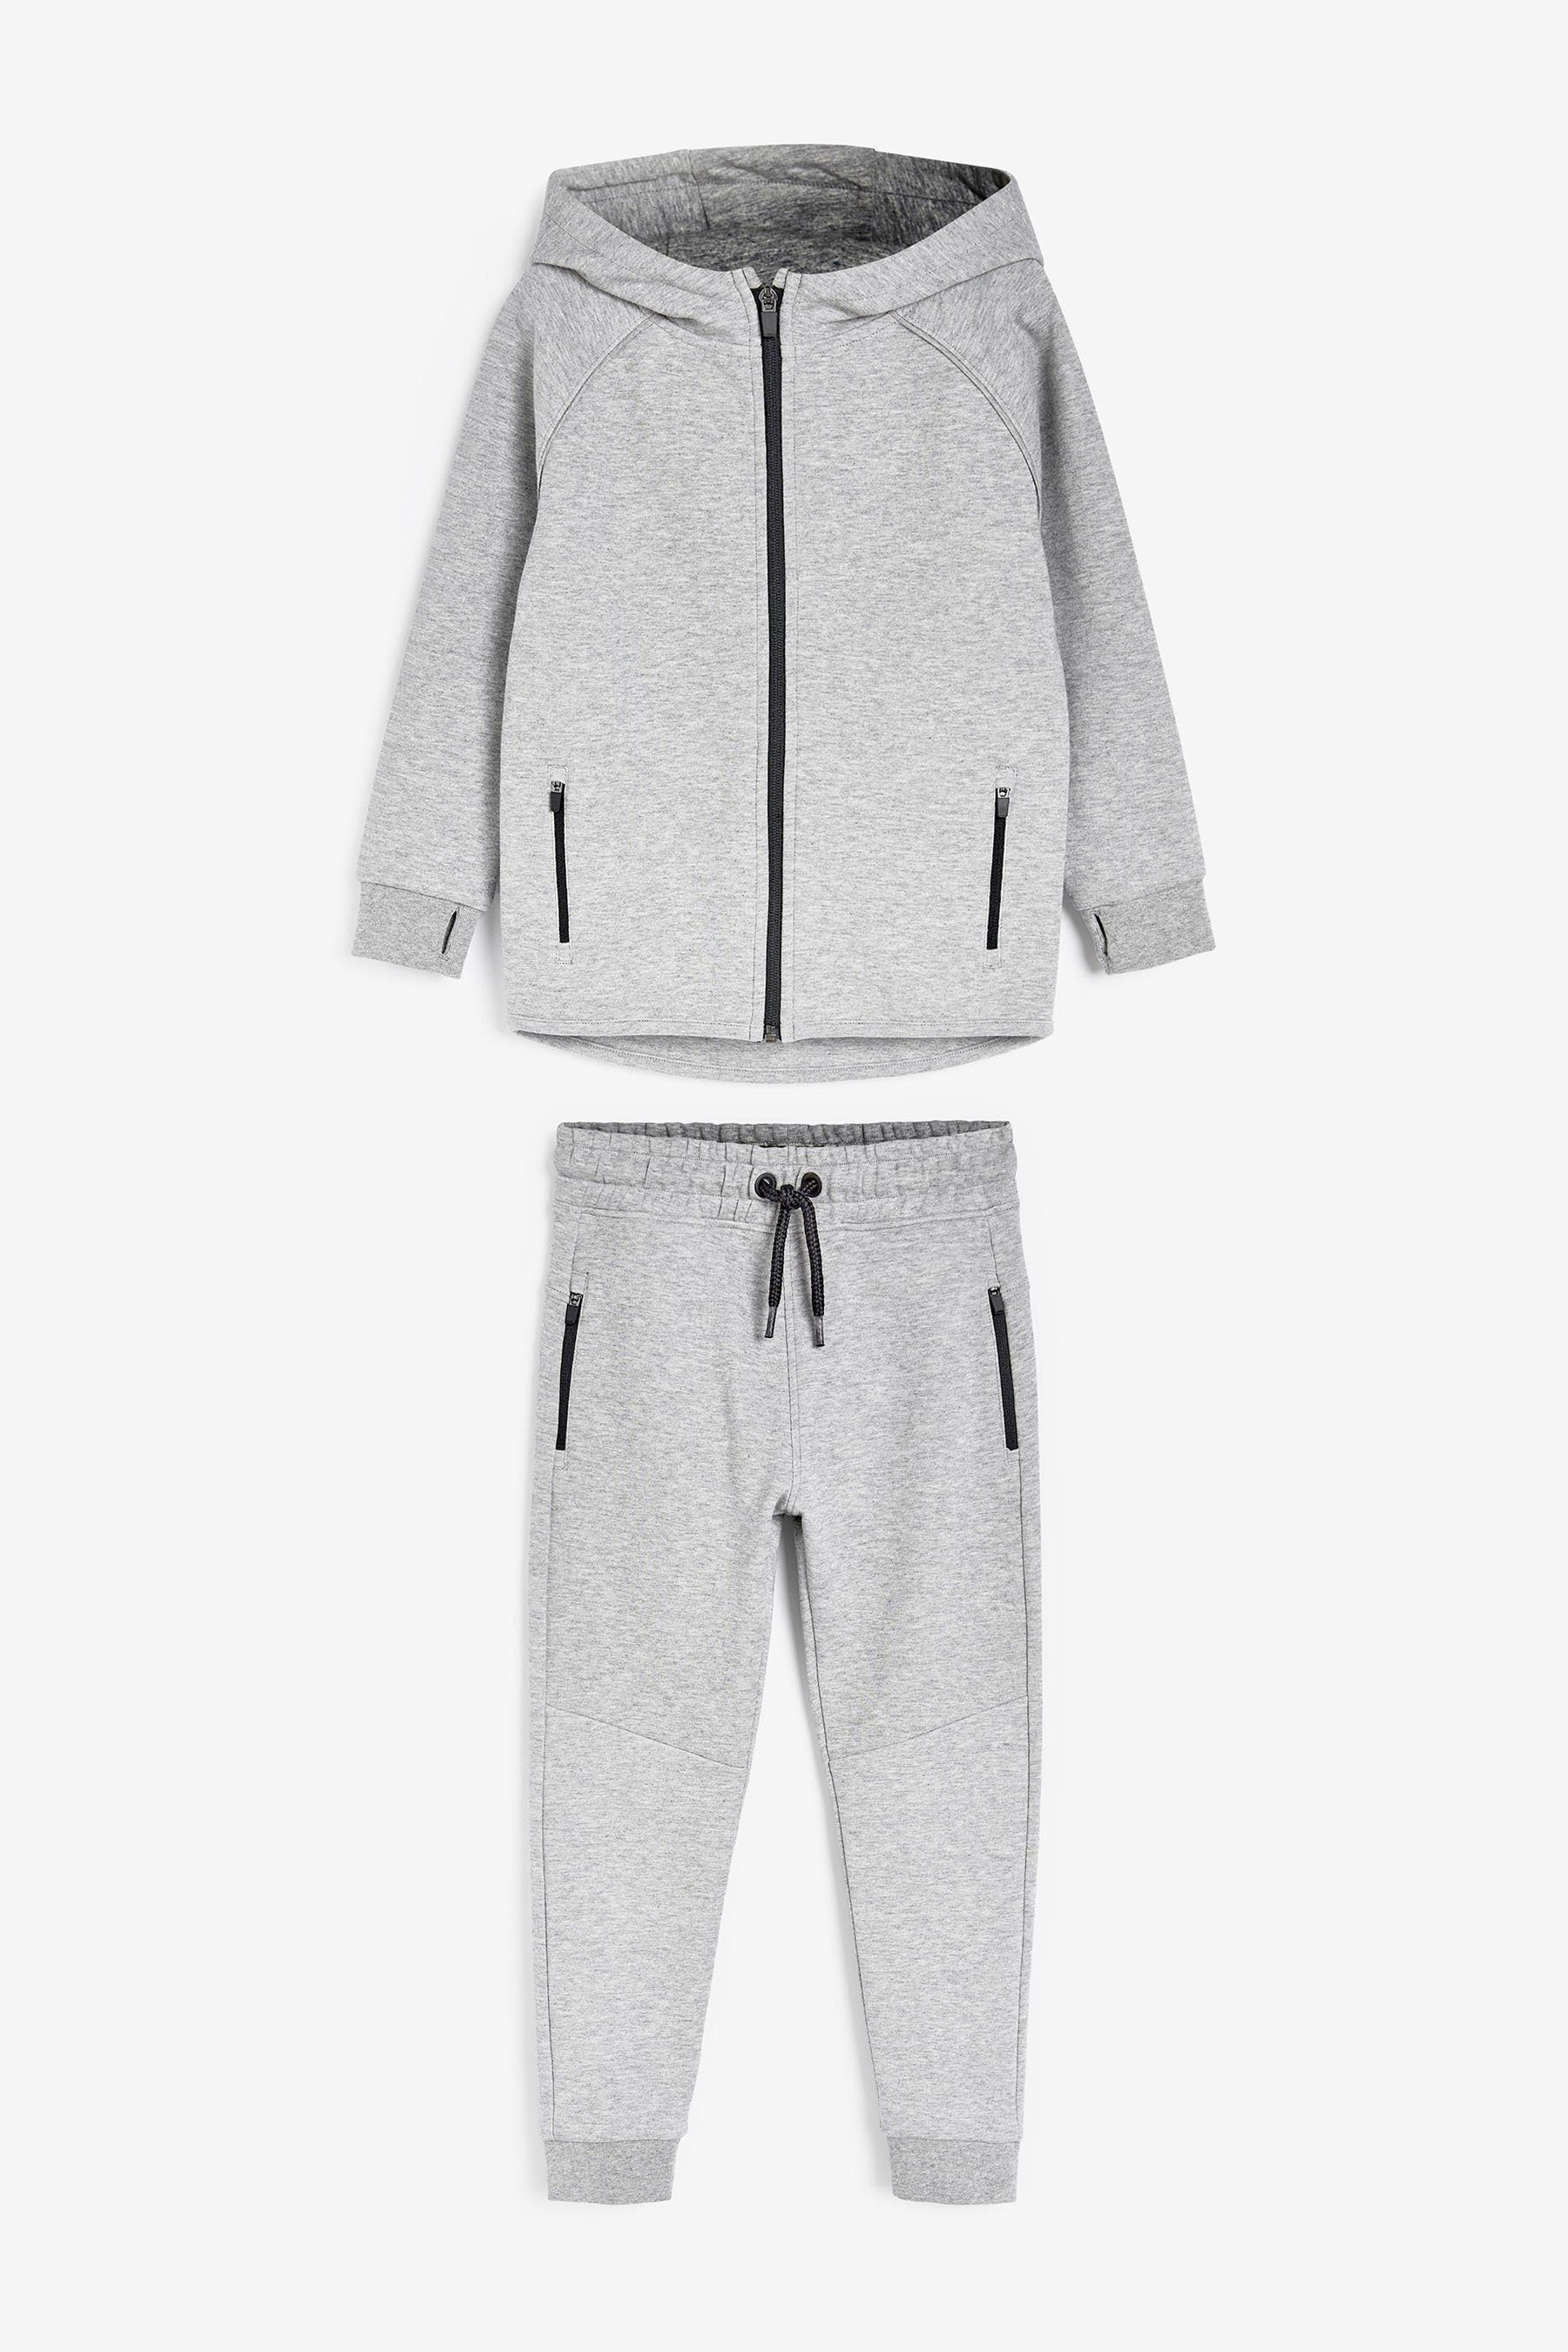 Next Jogginganzug Tech (2-tlg) Grey Sportswear-Set